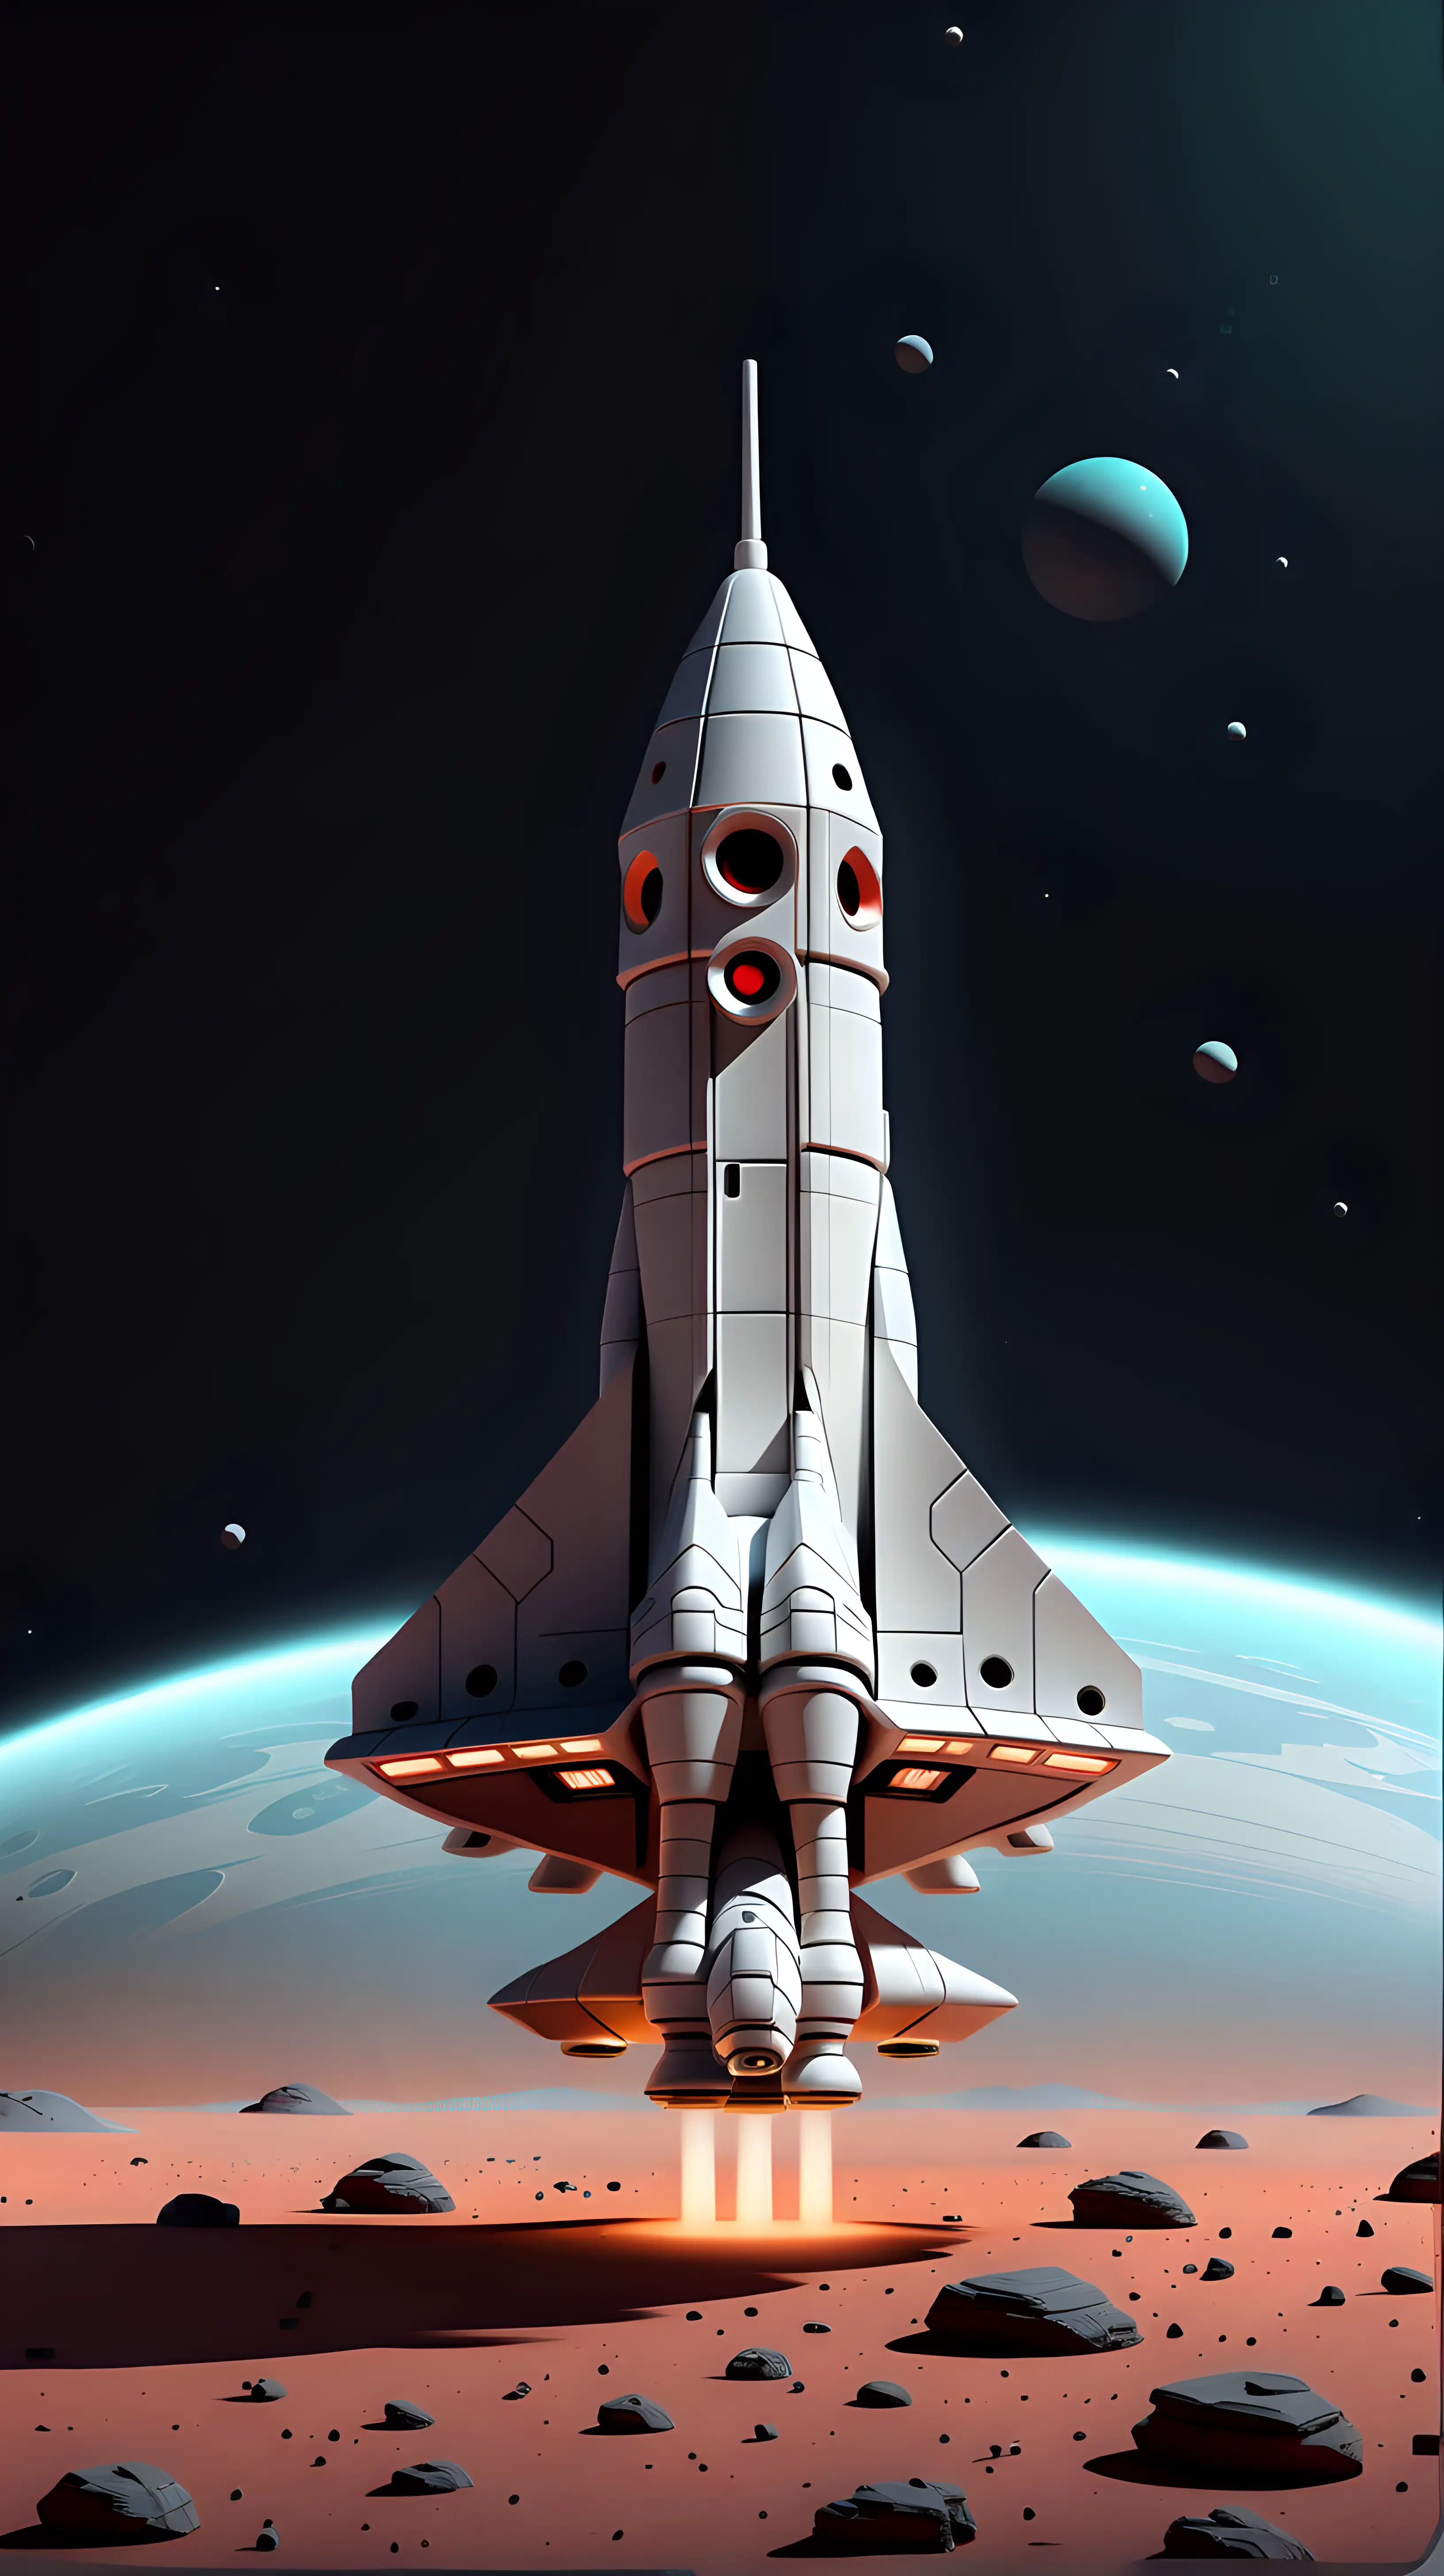 Minimalistic Spaceship Illustration in Futuristic Setting